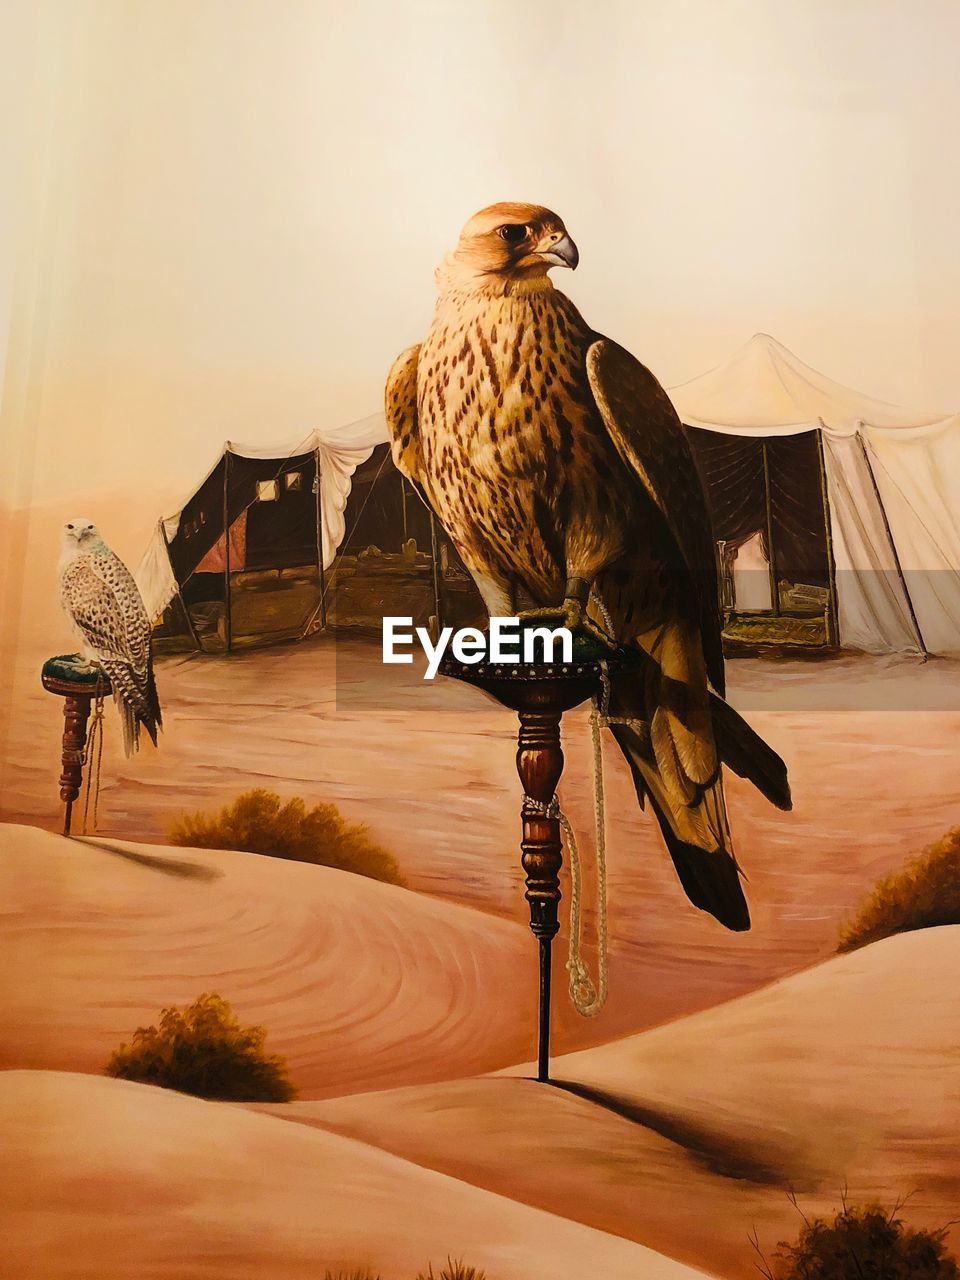 Painting of eagles in desert